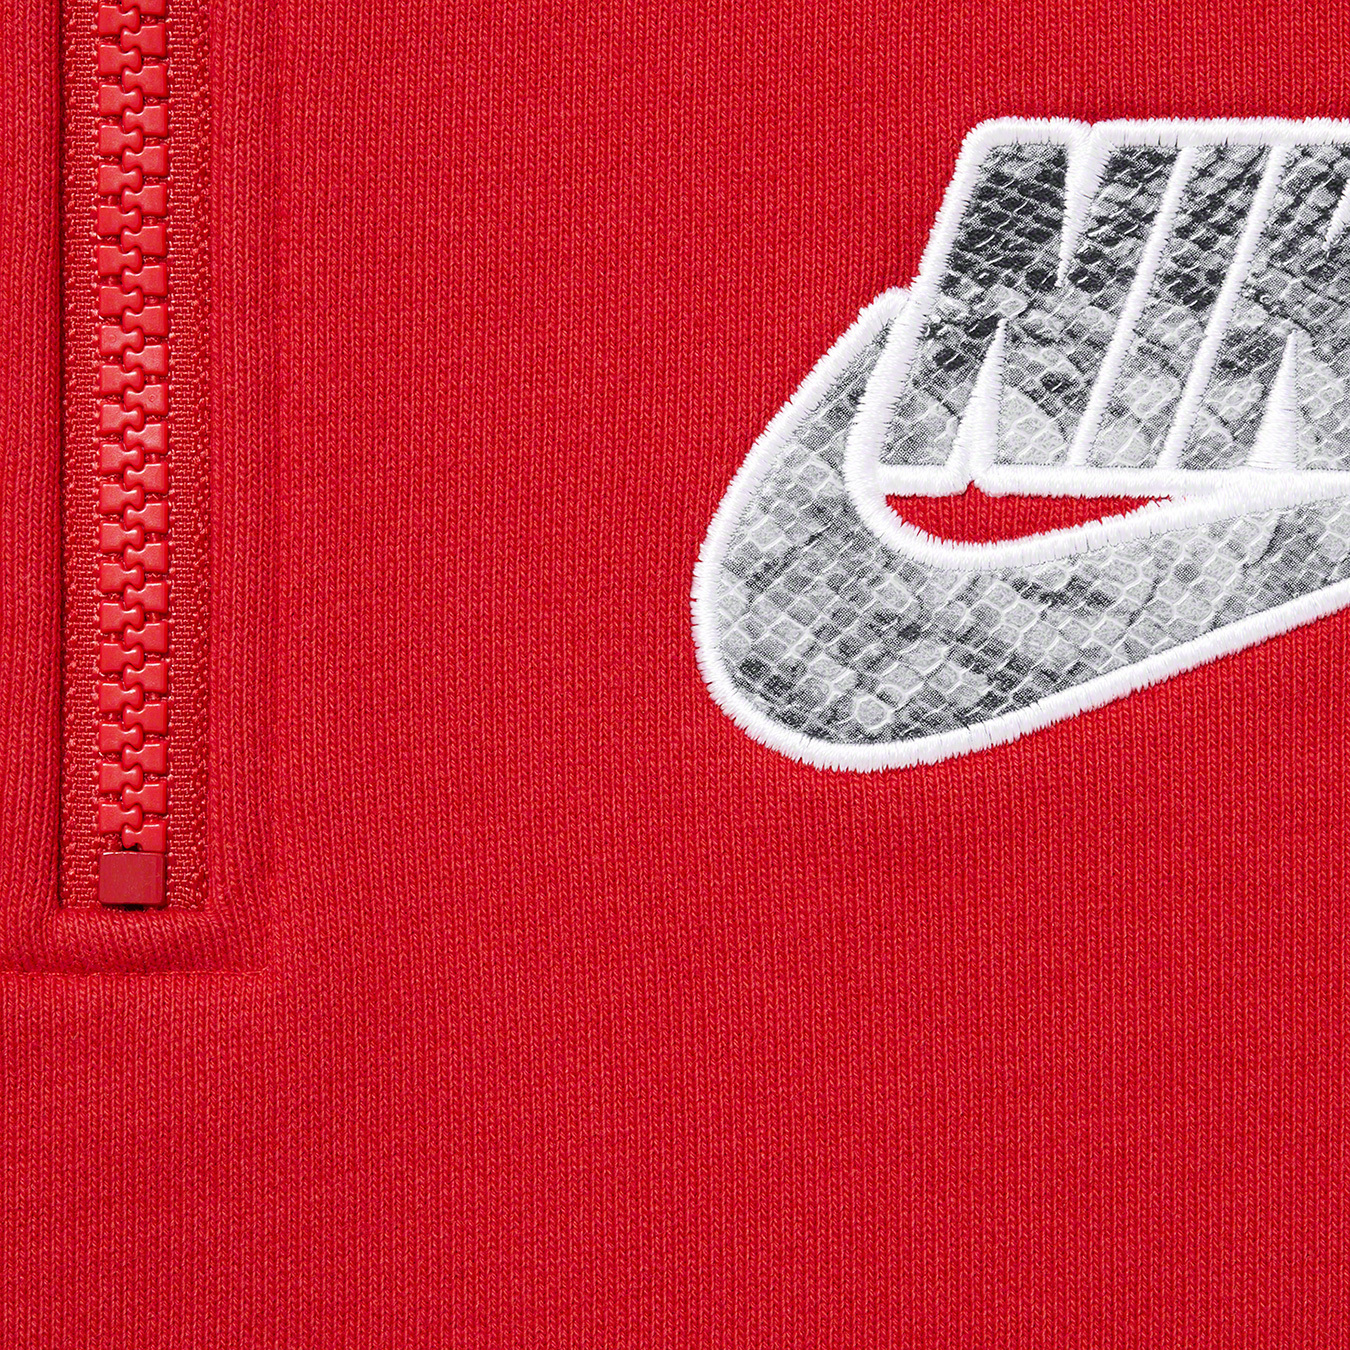 Supreme x Nike Half Zip Hooded Sweatshirt 'Red